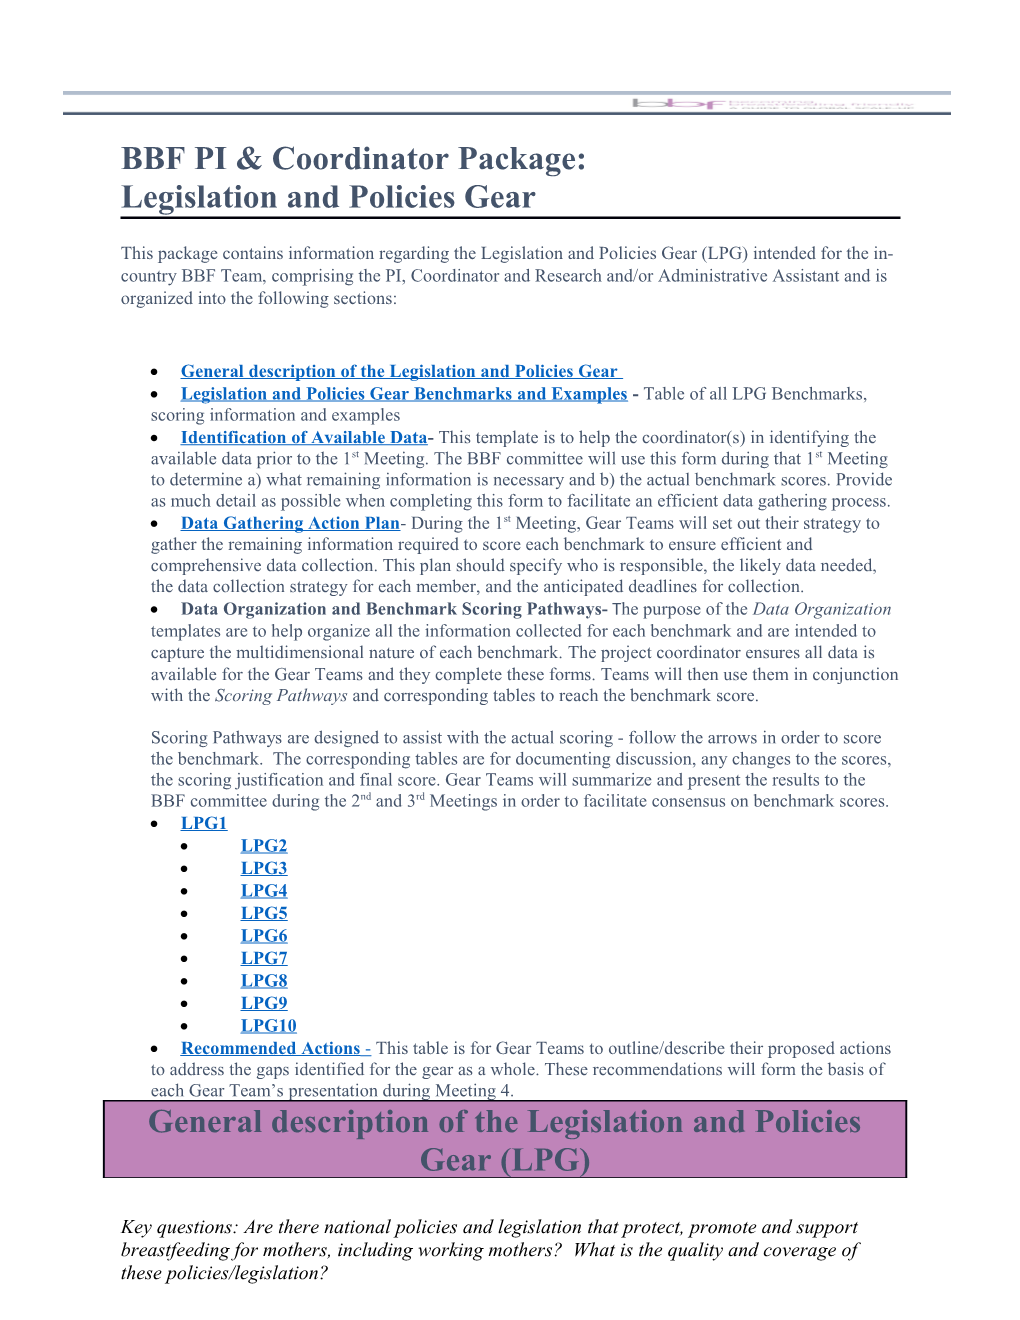 Legislation and Policies Gear